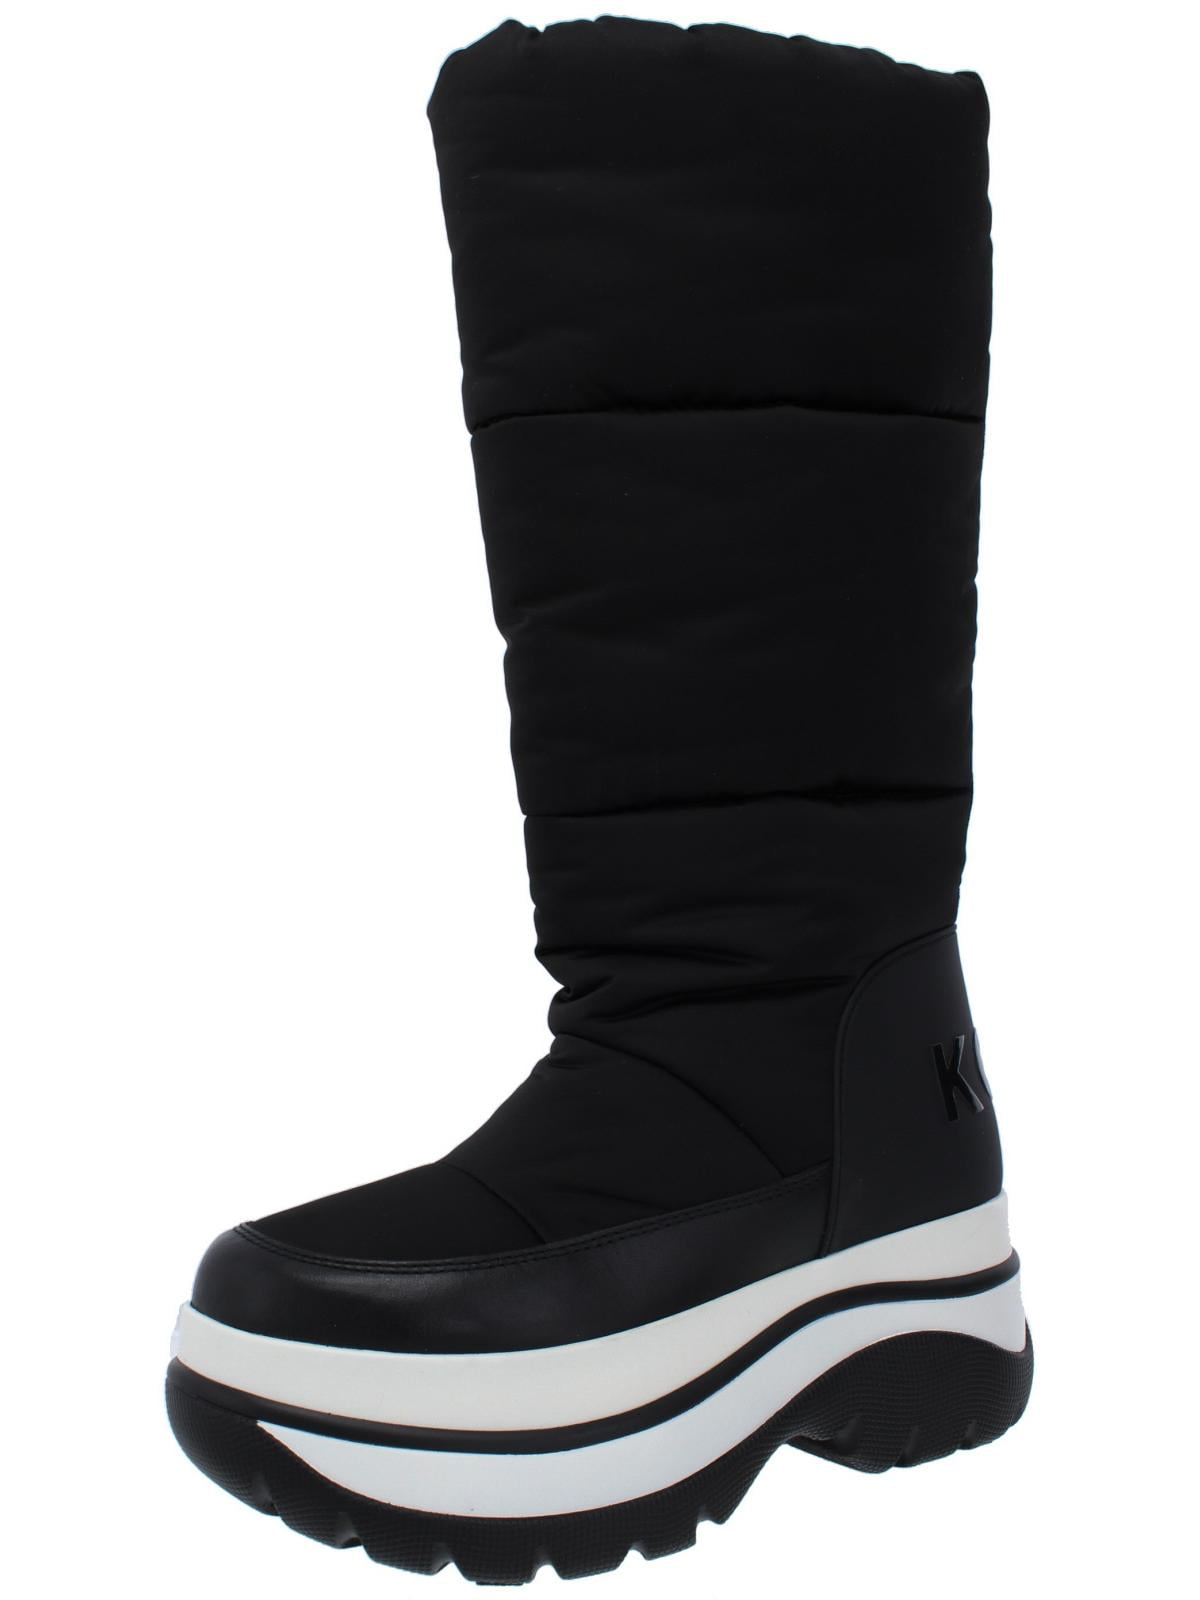 women's winter boots michael kors